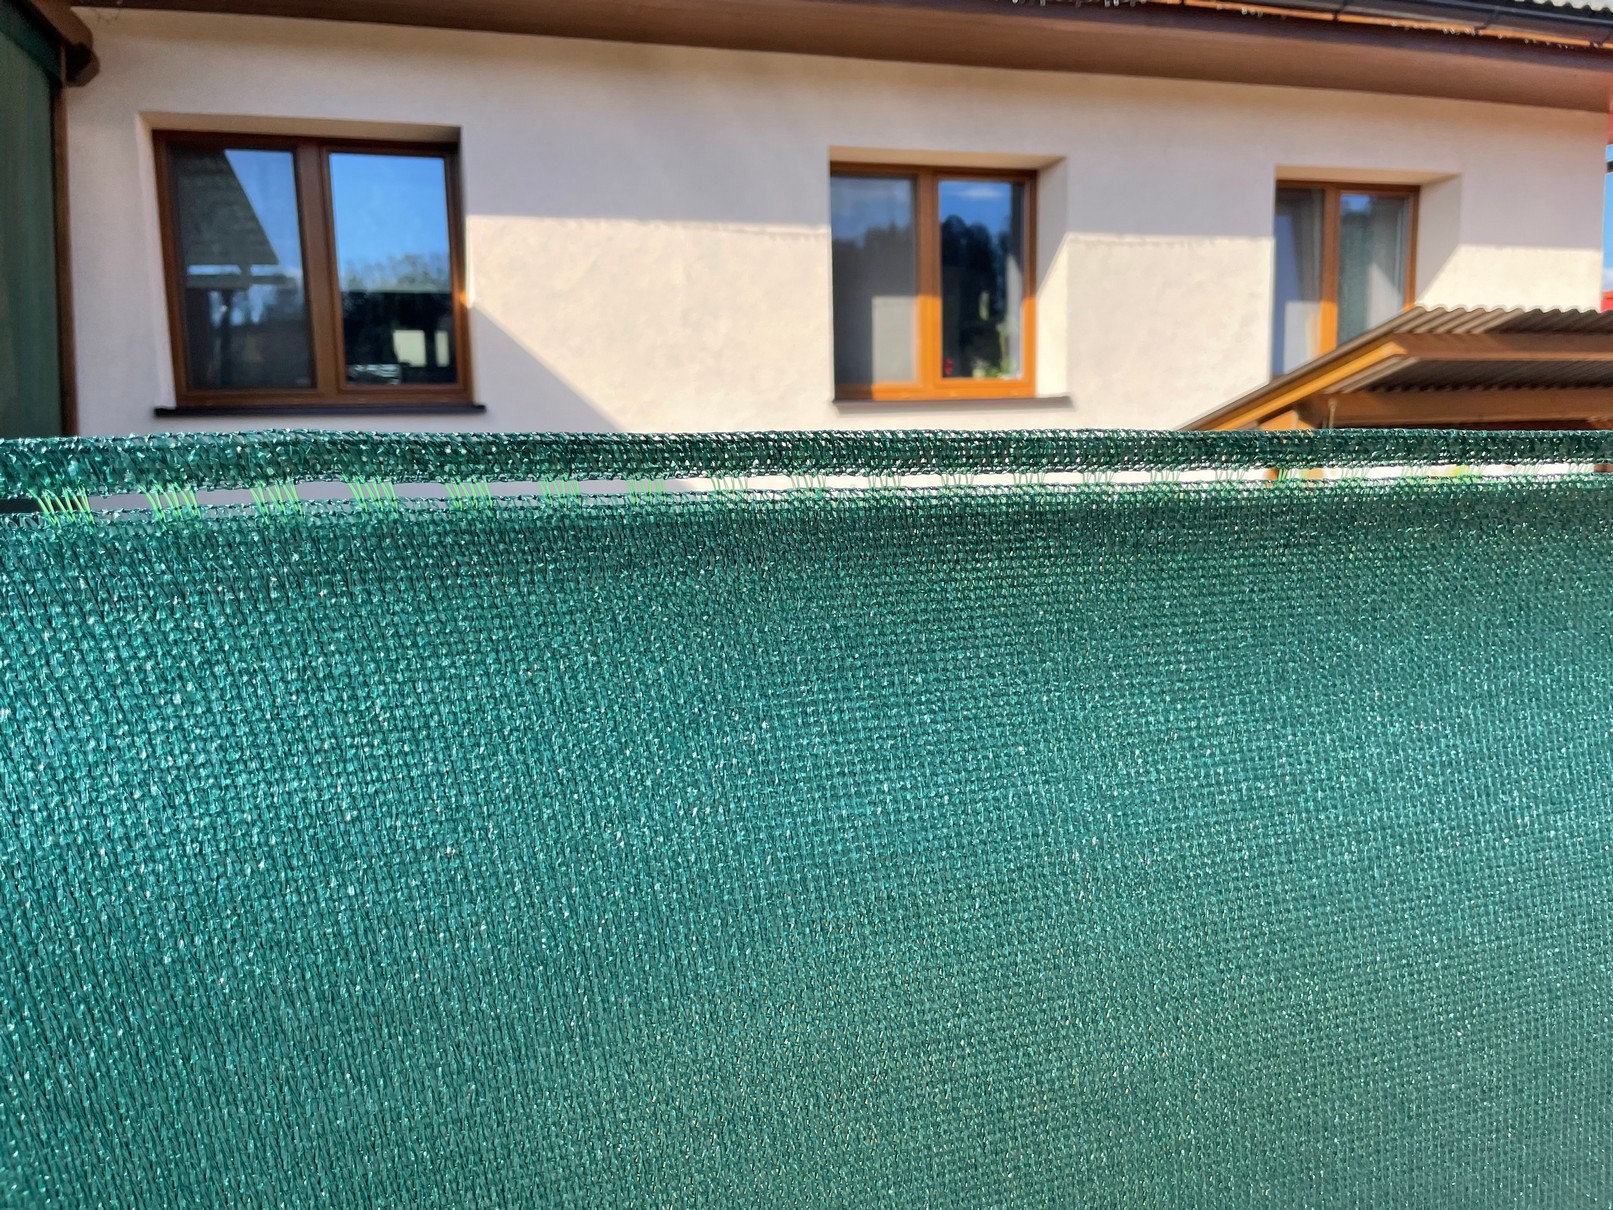 GTEX Stínící tkanina, rašlový úplet 100%, 200g/m2, výška 1m, metráž po 5m (5,10,15,20m) zelená ZAHRADA Sklad6 0001 100